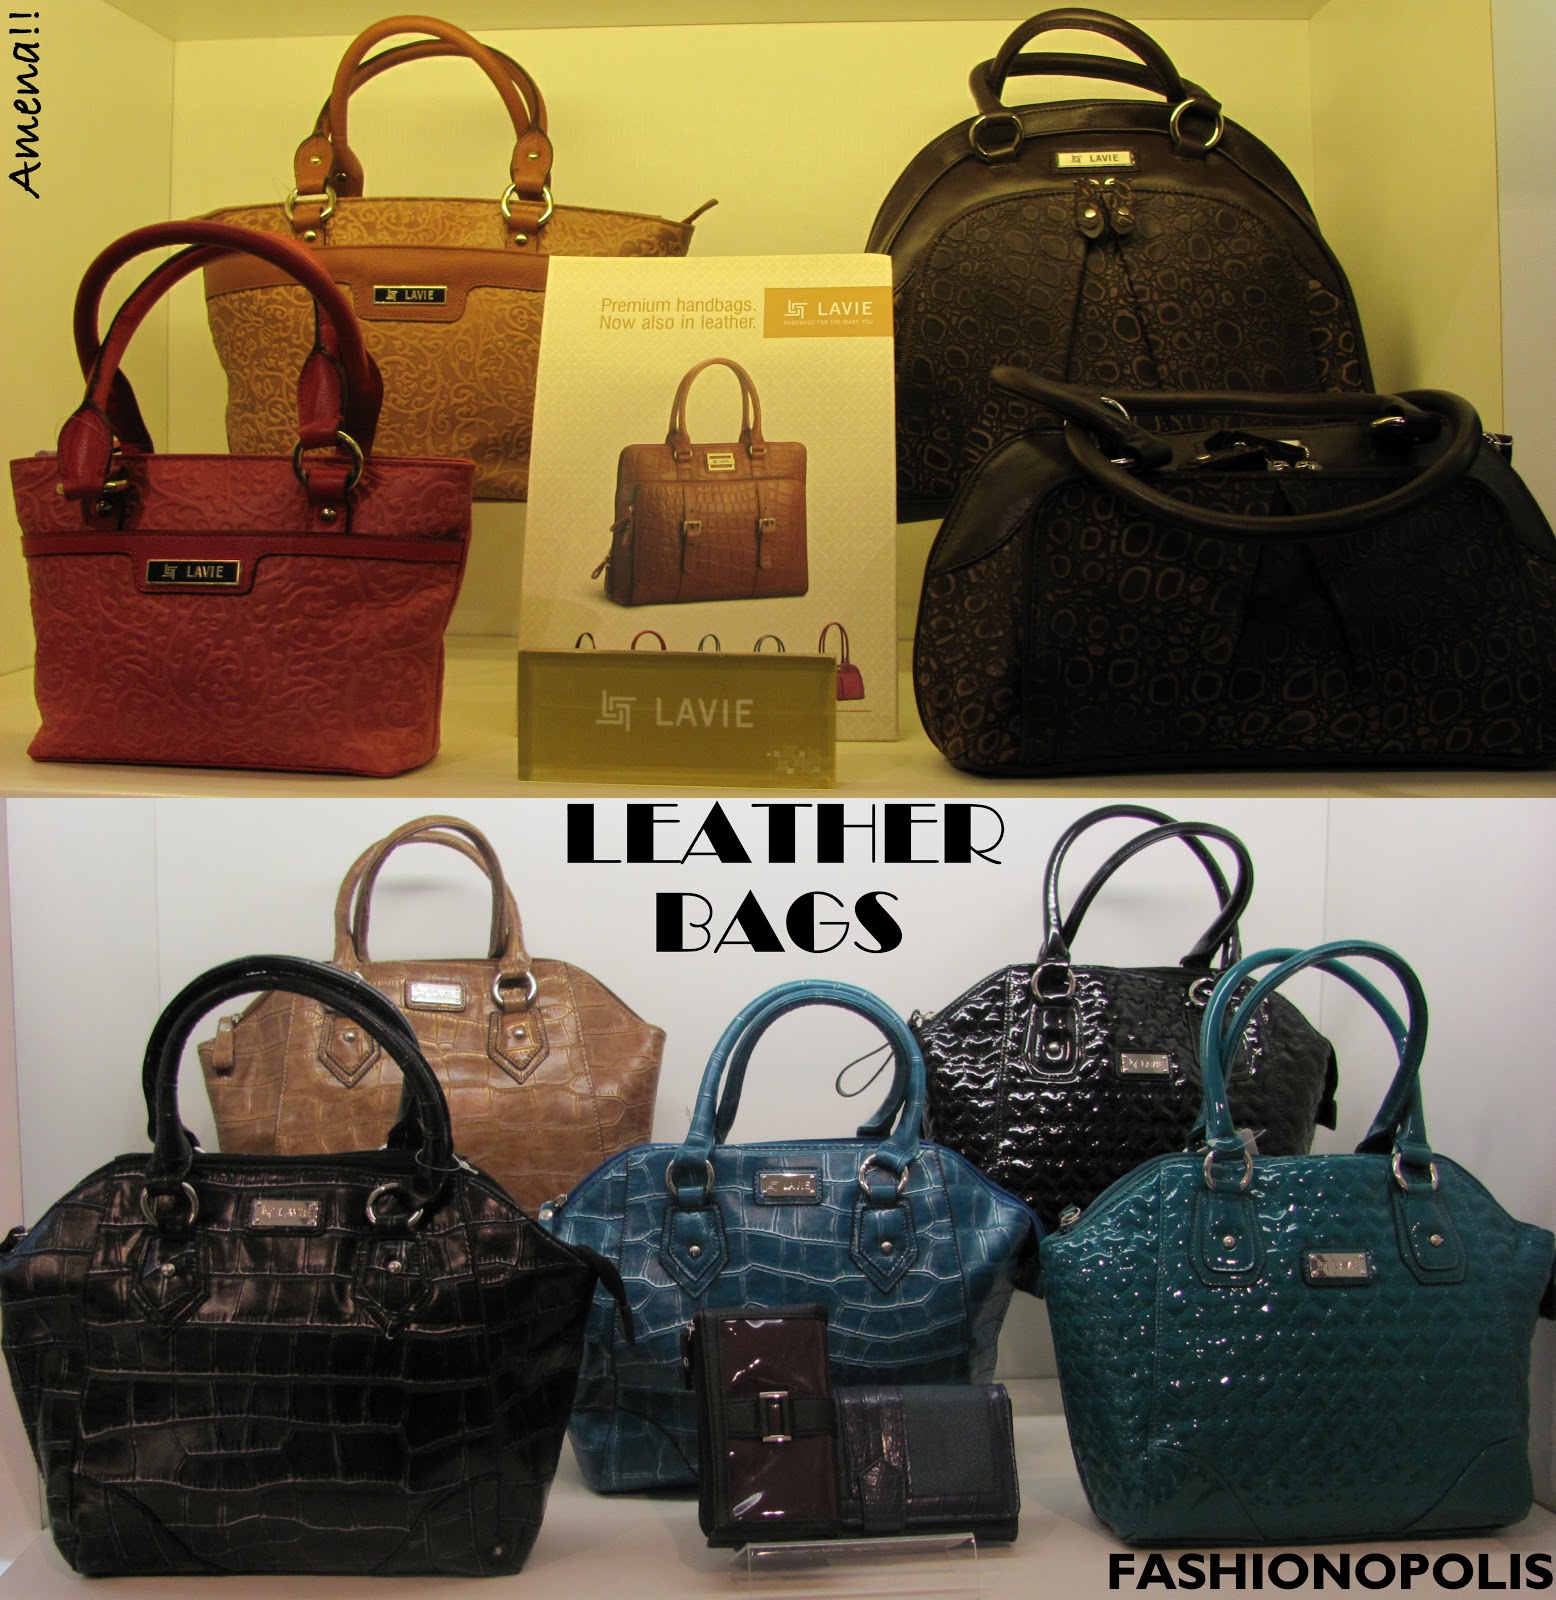 7 Celebrity Owned Designer Handbags That We'd Love In Our Closet: From  Deepika Padukone's Fendi Handbag To Kangana Ranaut's Christian Dior Book  Tote